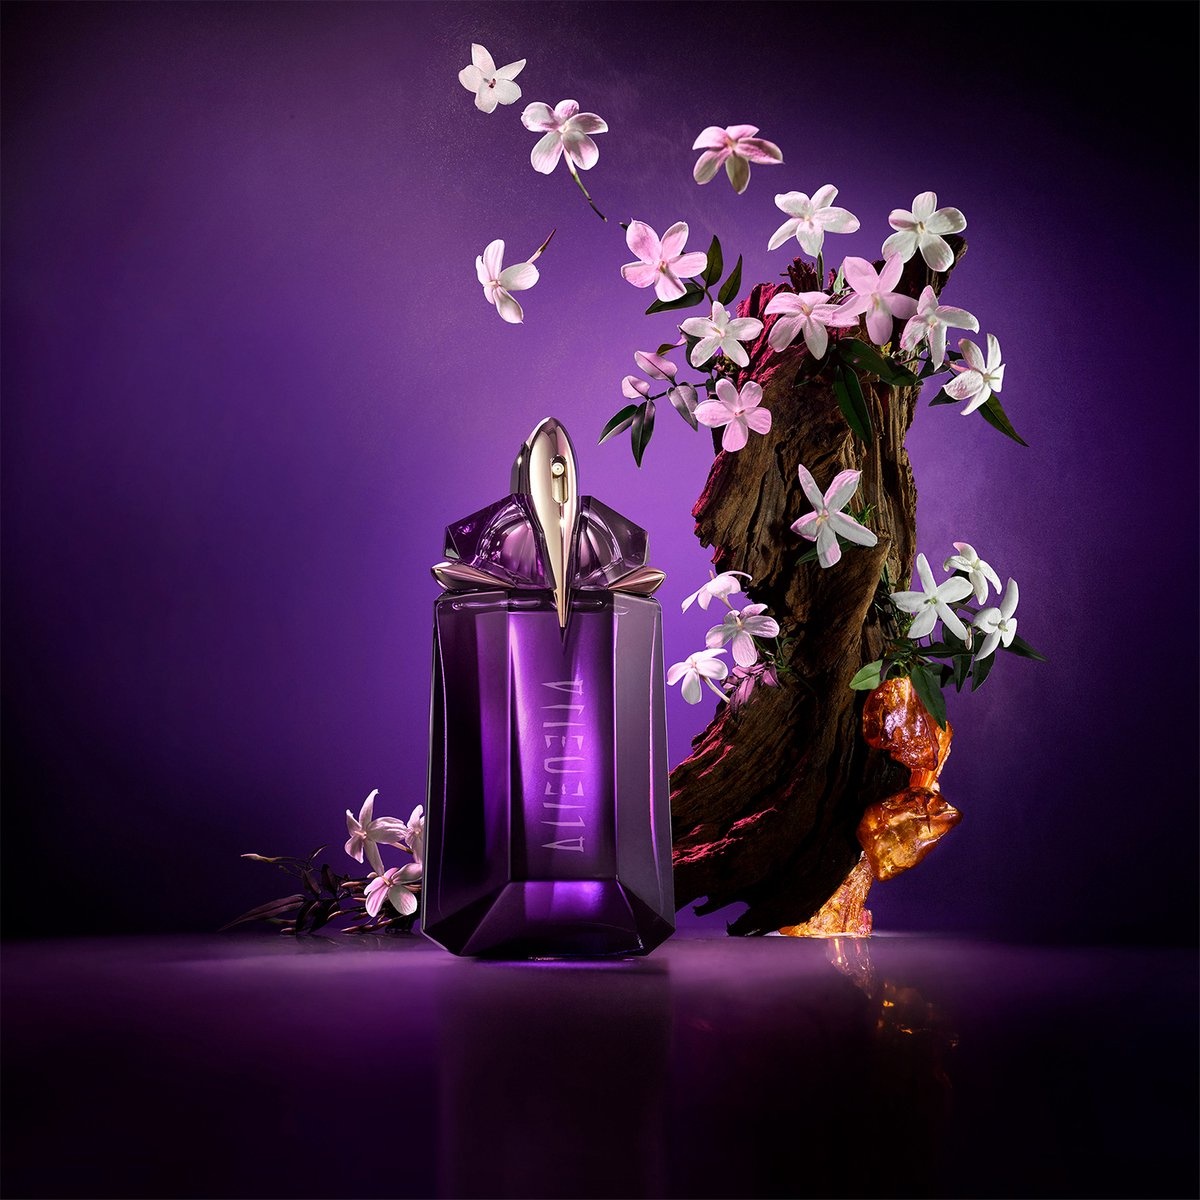 Thierry Mugler Alien 60 ml - Eau de Parfum - Women's Perfume - Refillable